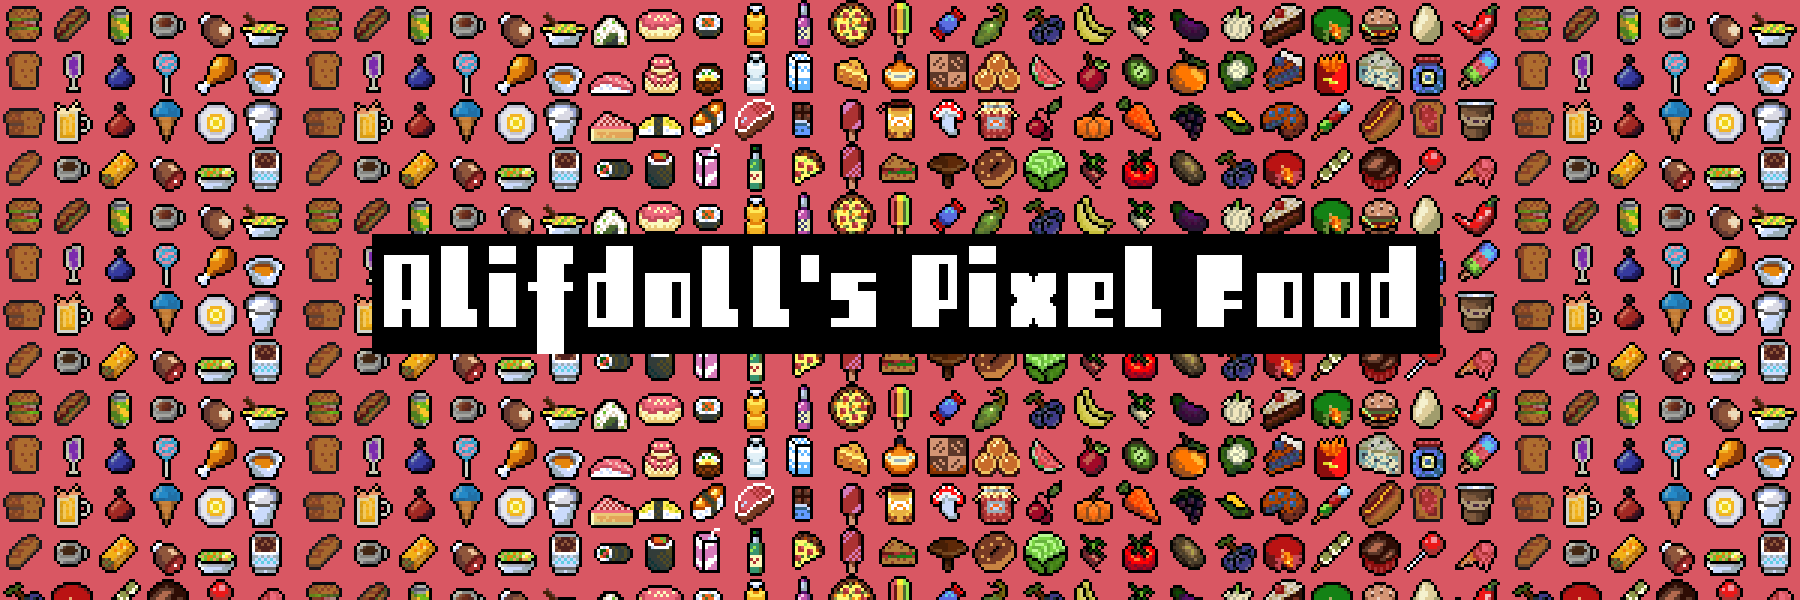 Pixel Food and Beverages Asset